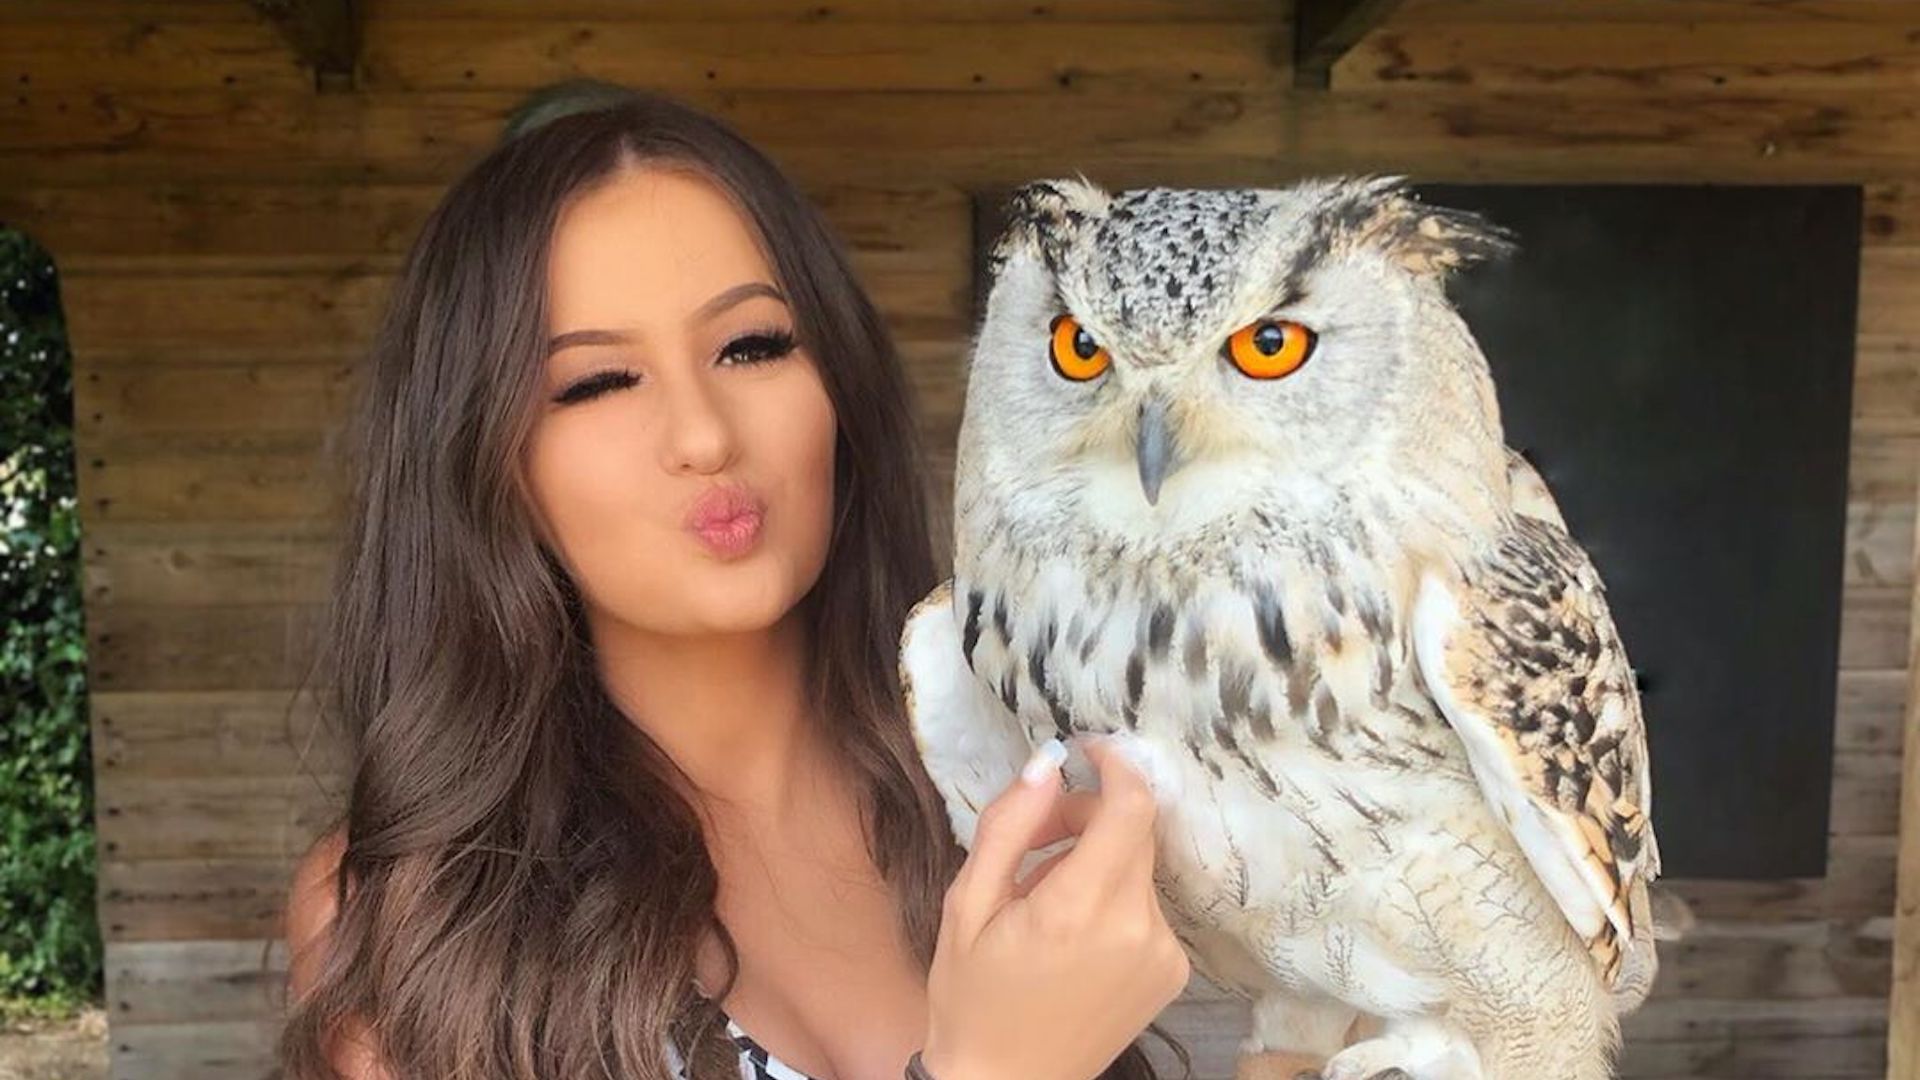 Holly and an owl